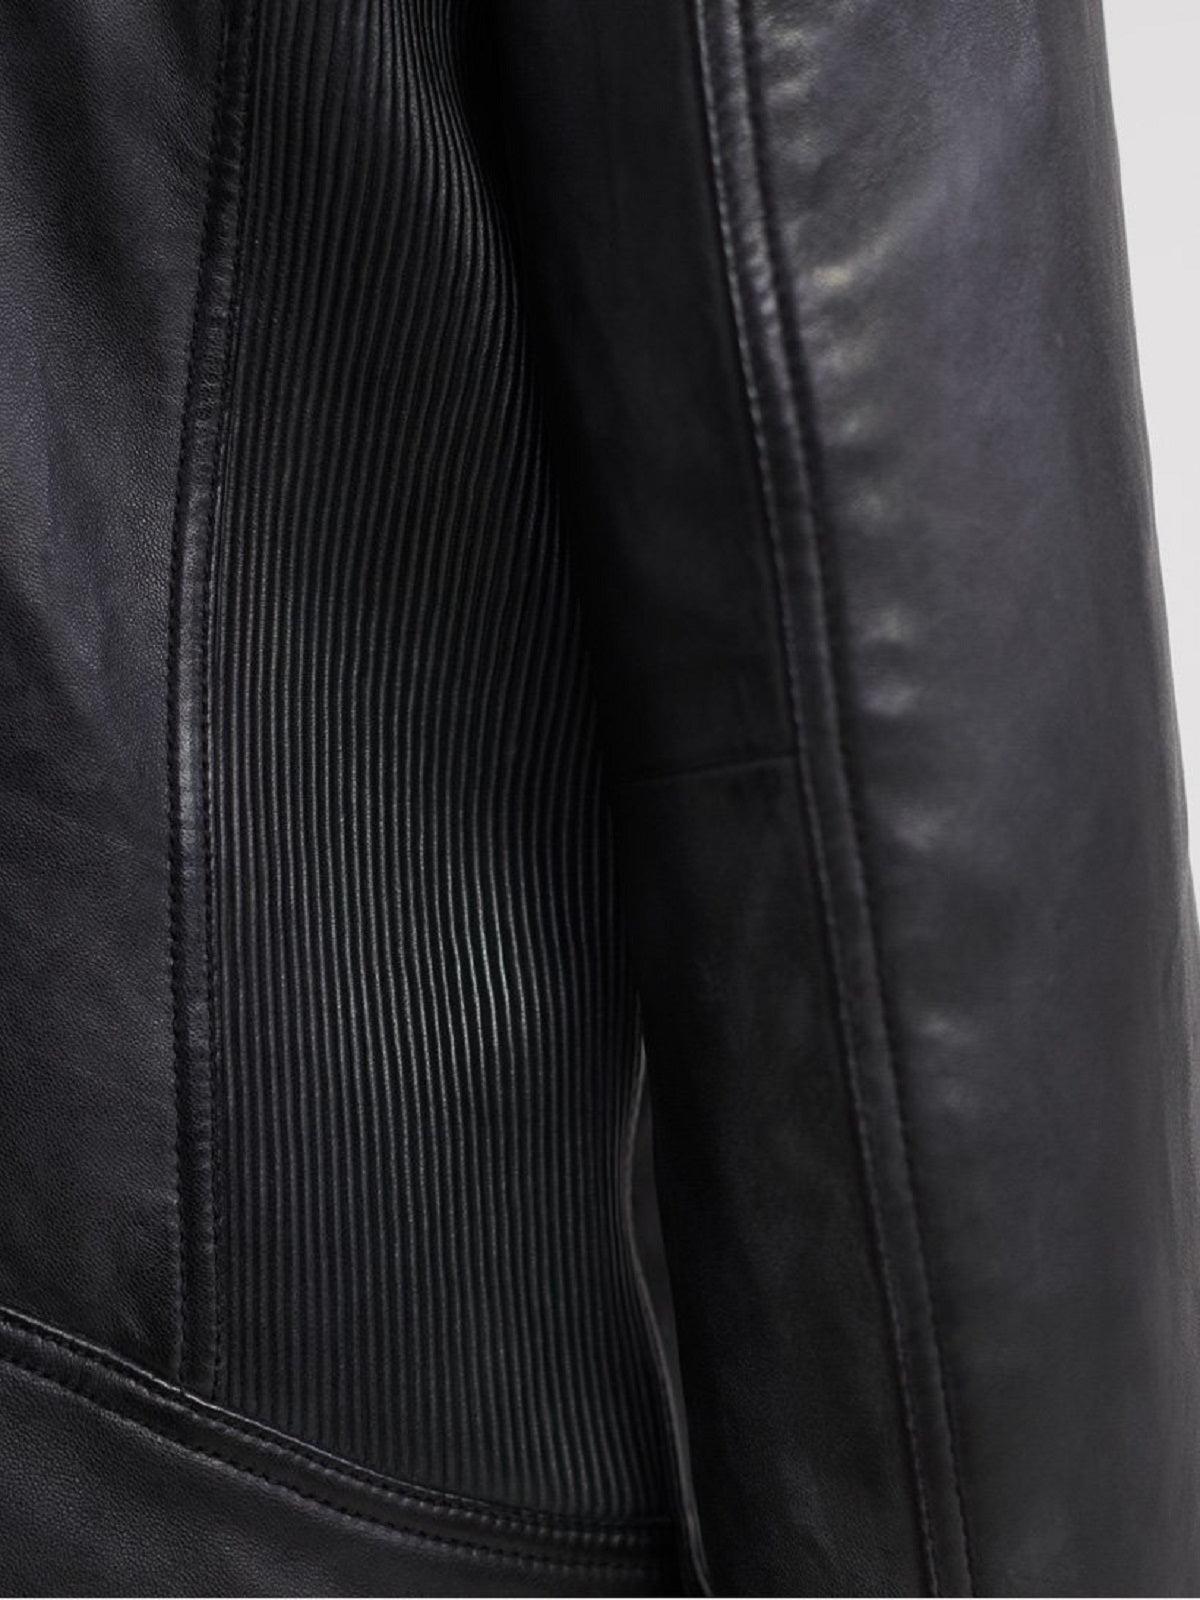 Men's Slim Fit Black Leather Jacket - shearlingbomberjackets